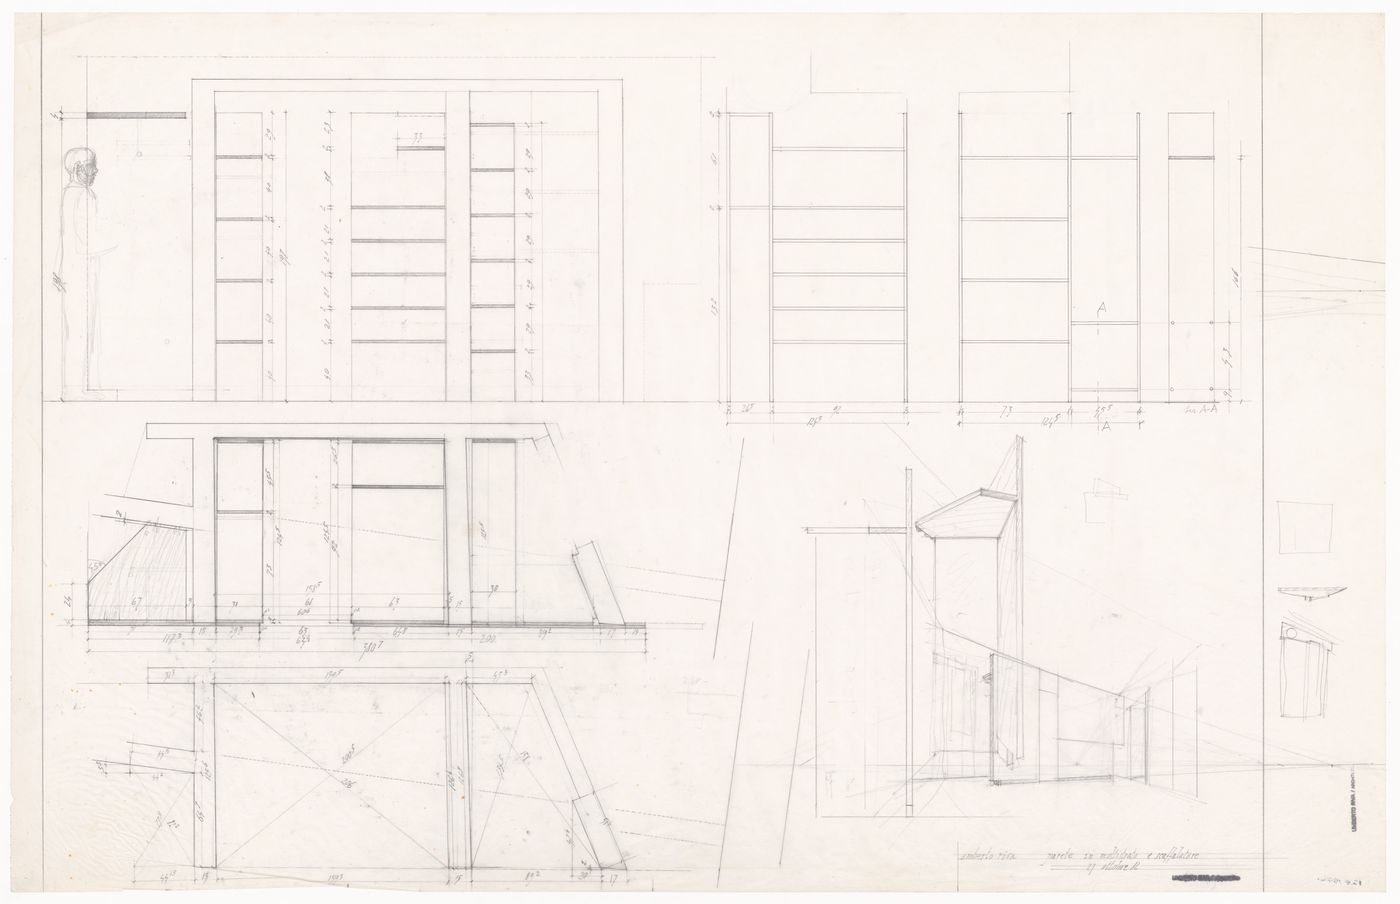 Sections and details for Via Vigevano condominio e studio, Milan, Italy